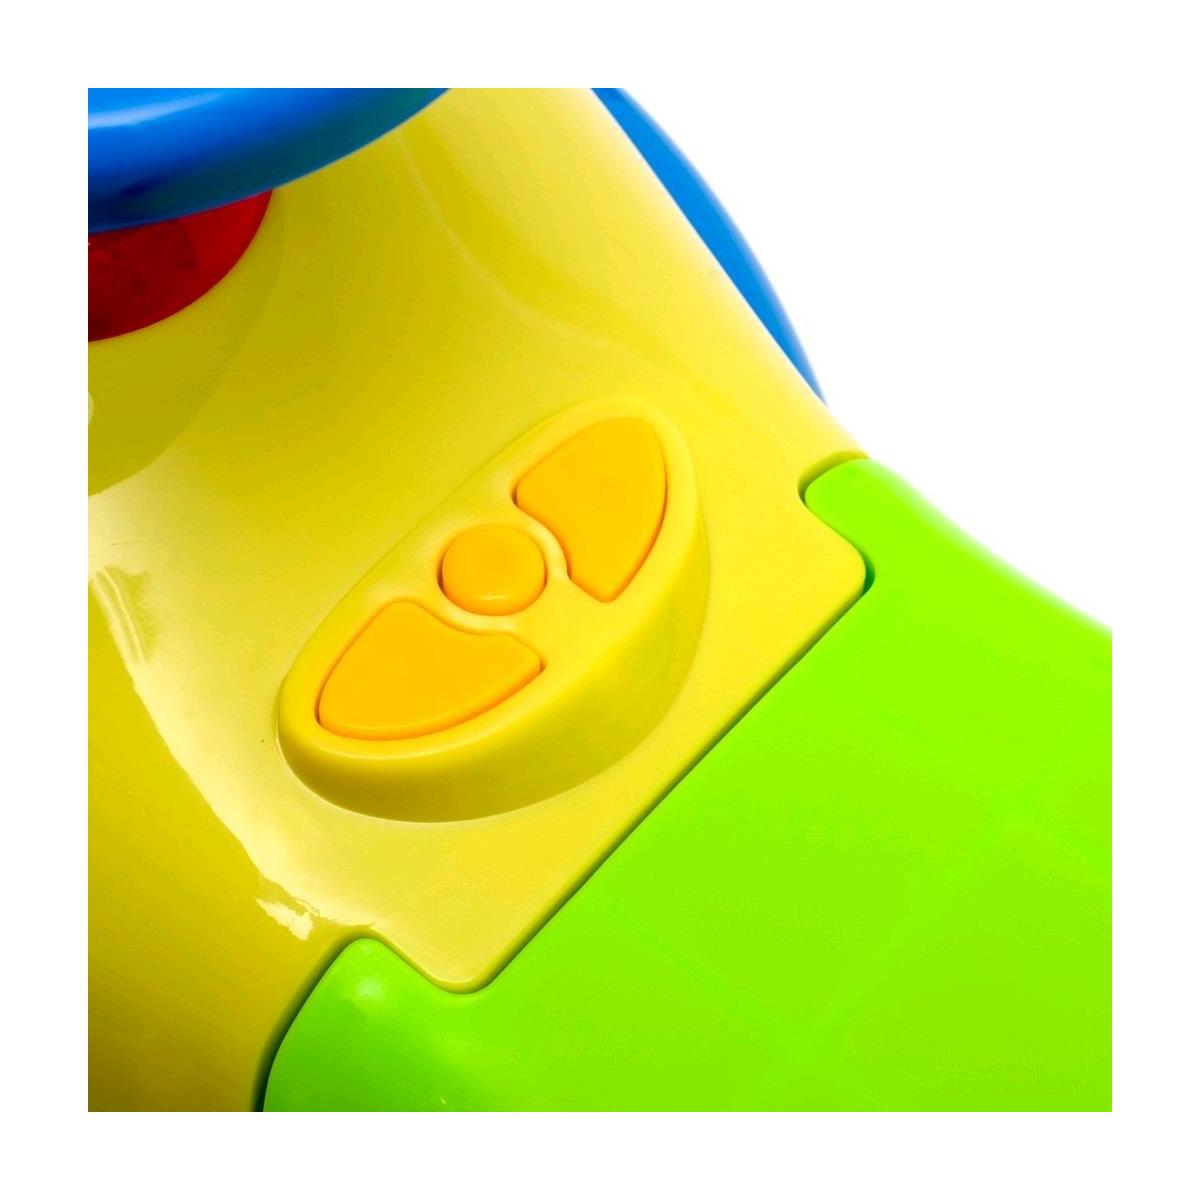 Dětská dílna Baby Mix Power Tool žlutá - dle obrázku